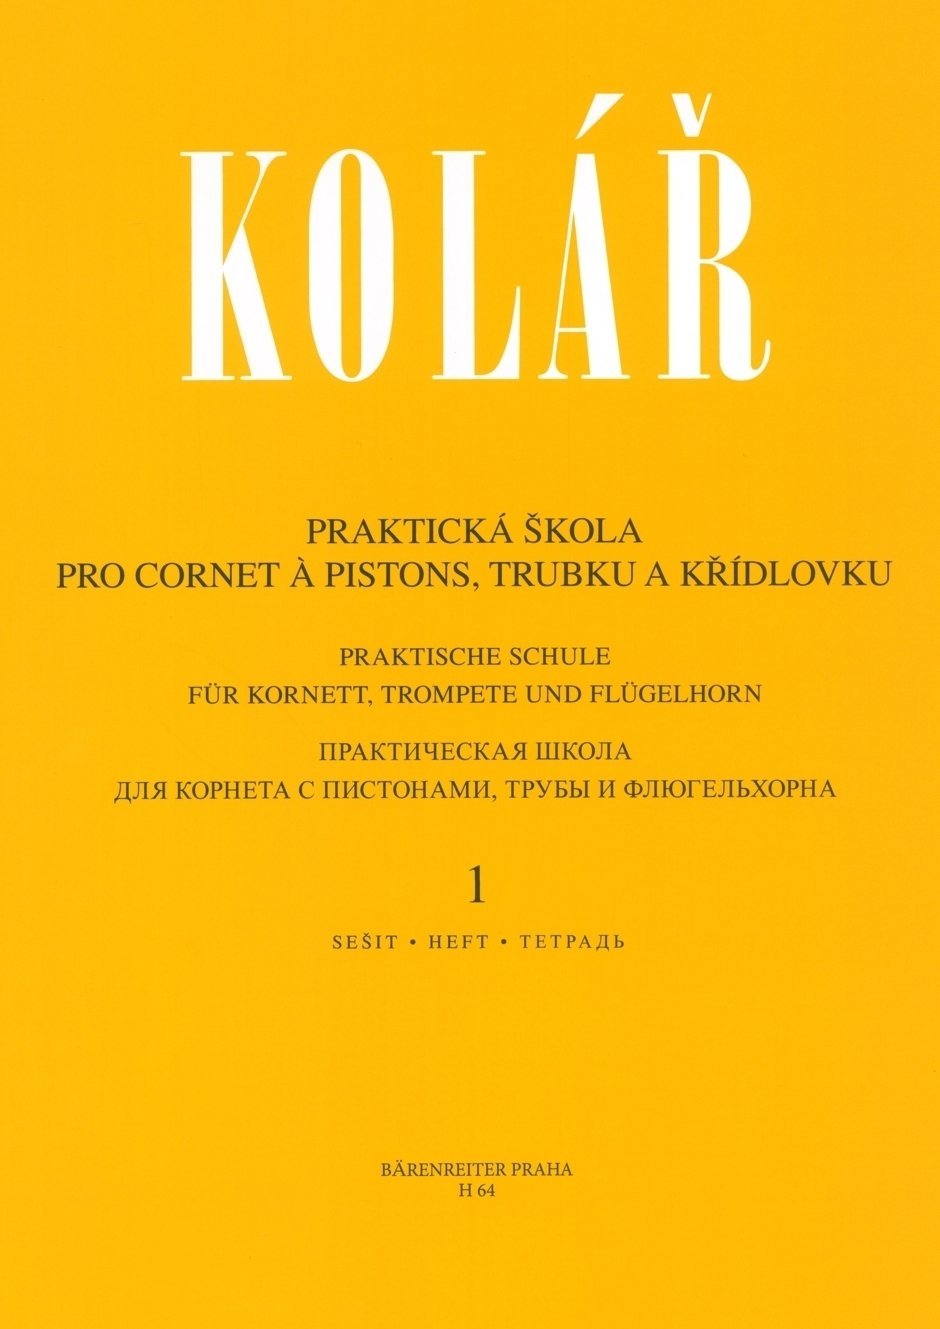 Partitura para instrumentos de viento Jaroslav Kolář Praktická škola pro cornet á pistons, trubku a křídlovku 1 Music Book Partitura para instrumentos de viento